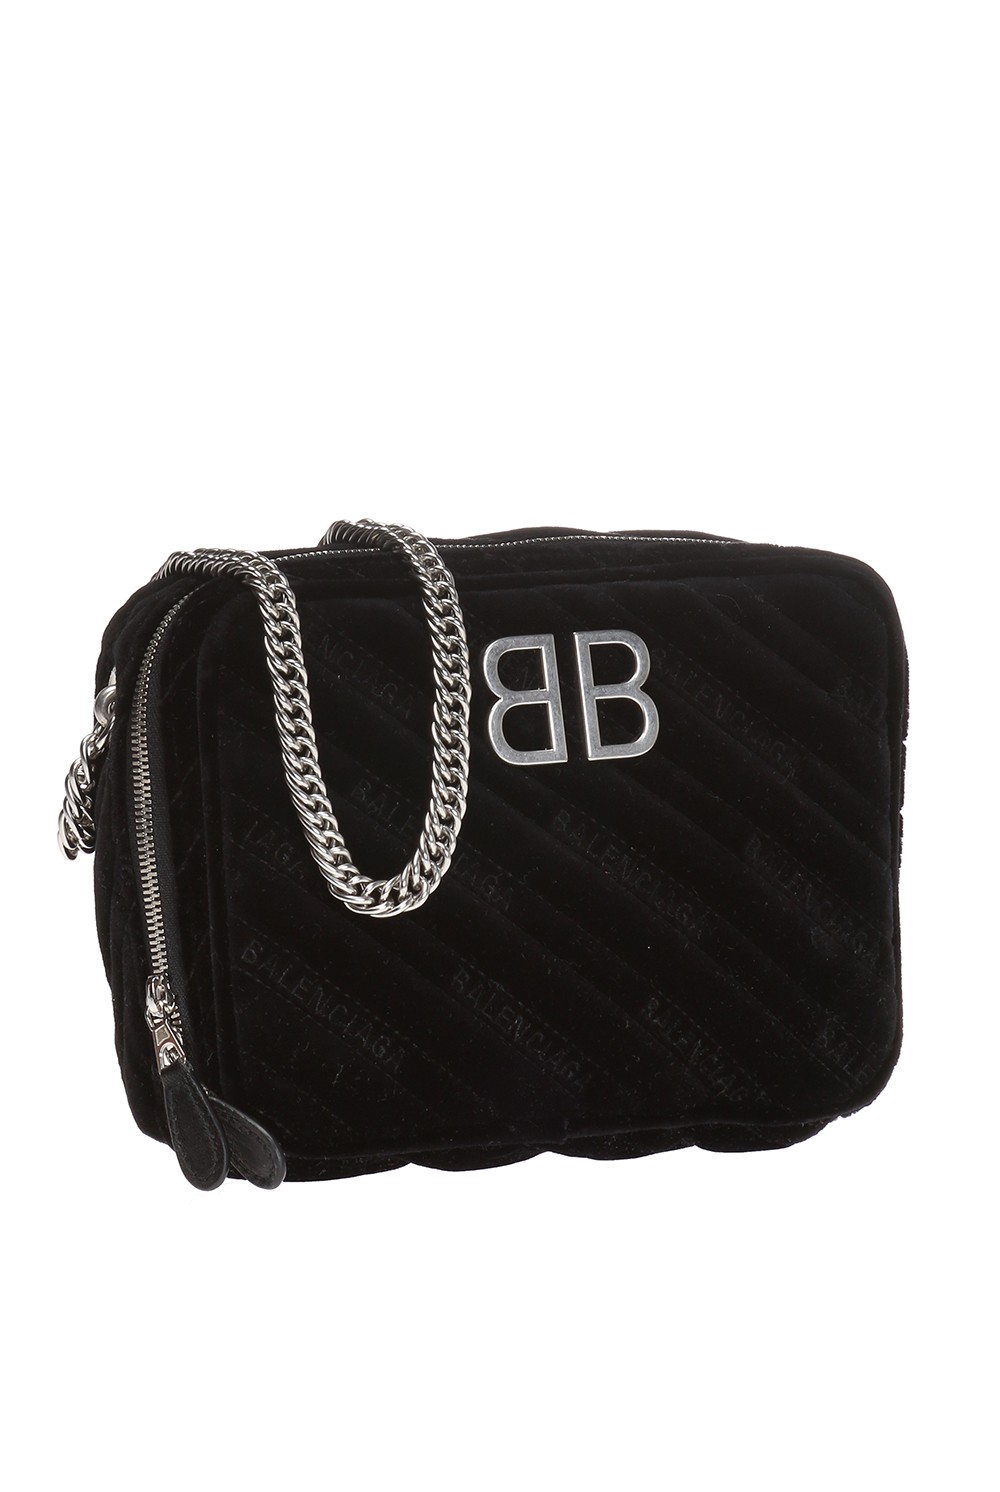 Black BB REPORTER' shoulder bag Balenciaga - Vitkac Canada